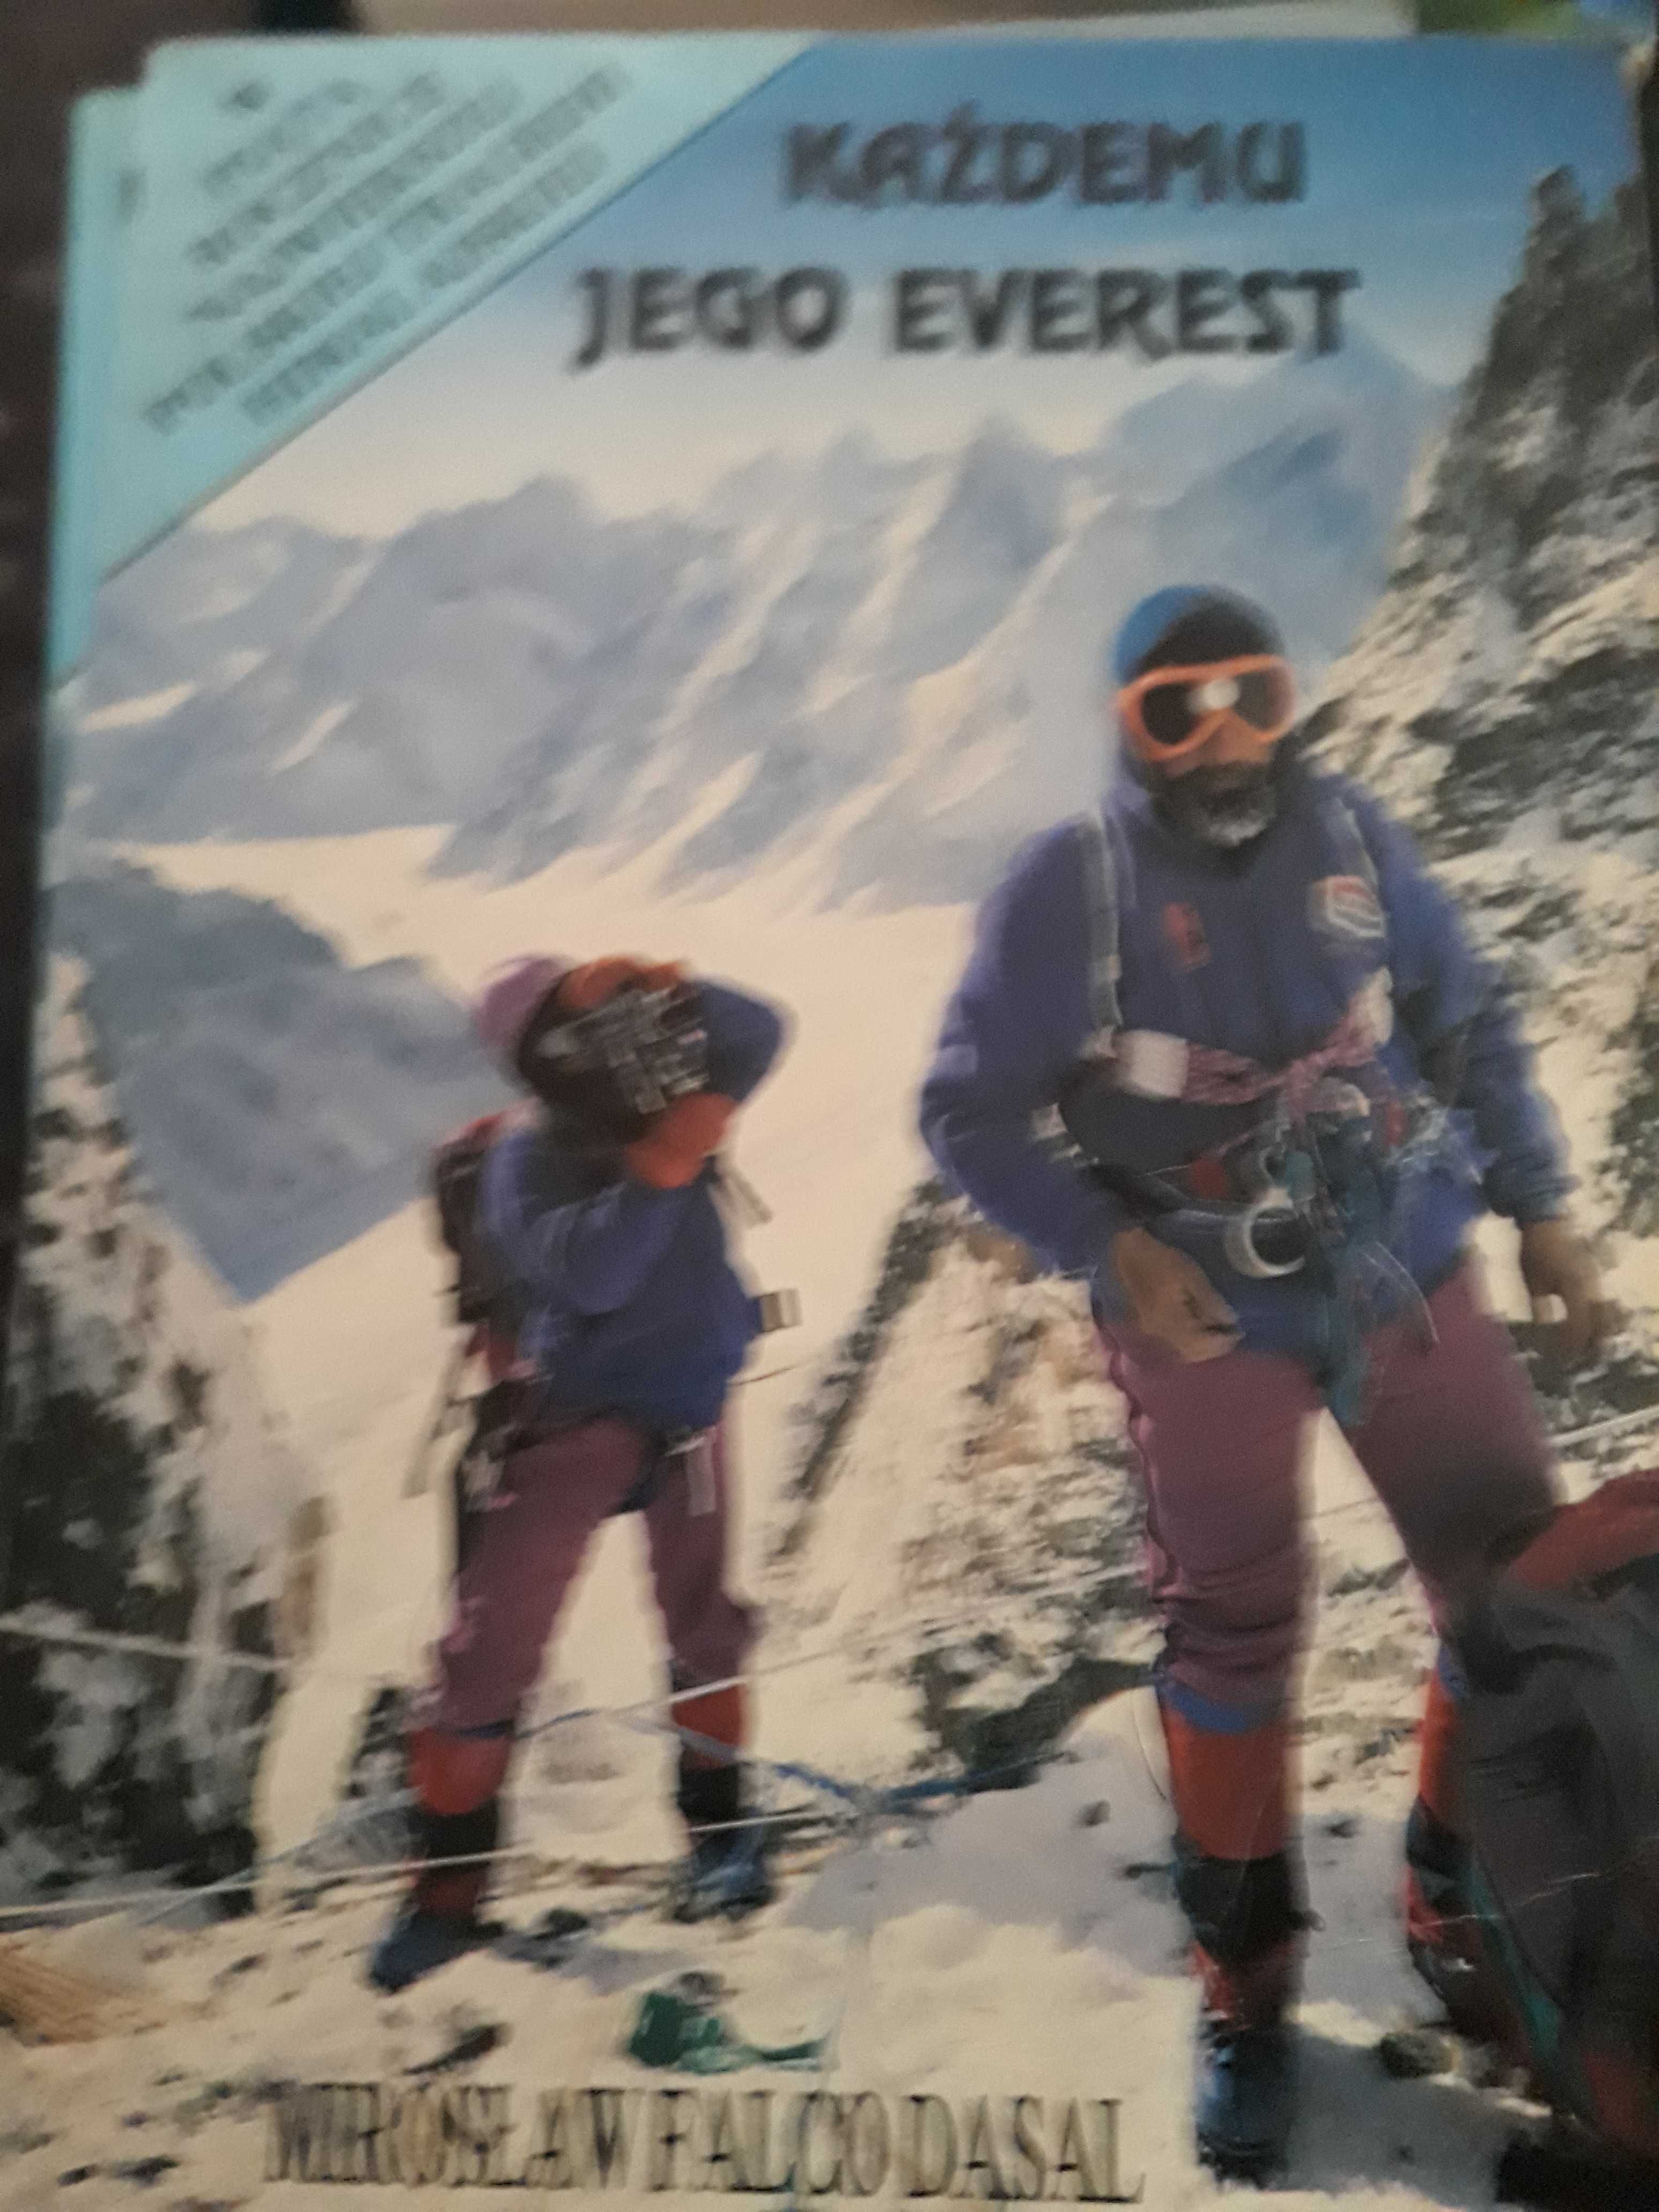 Każdemu jego Everest Mirosław Falco Dąsal